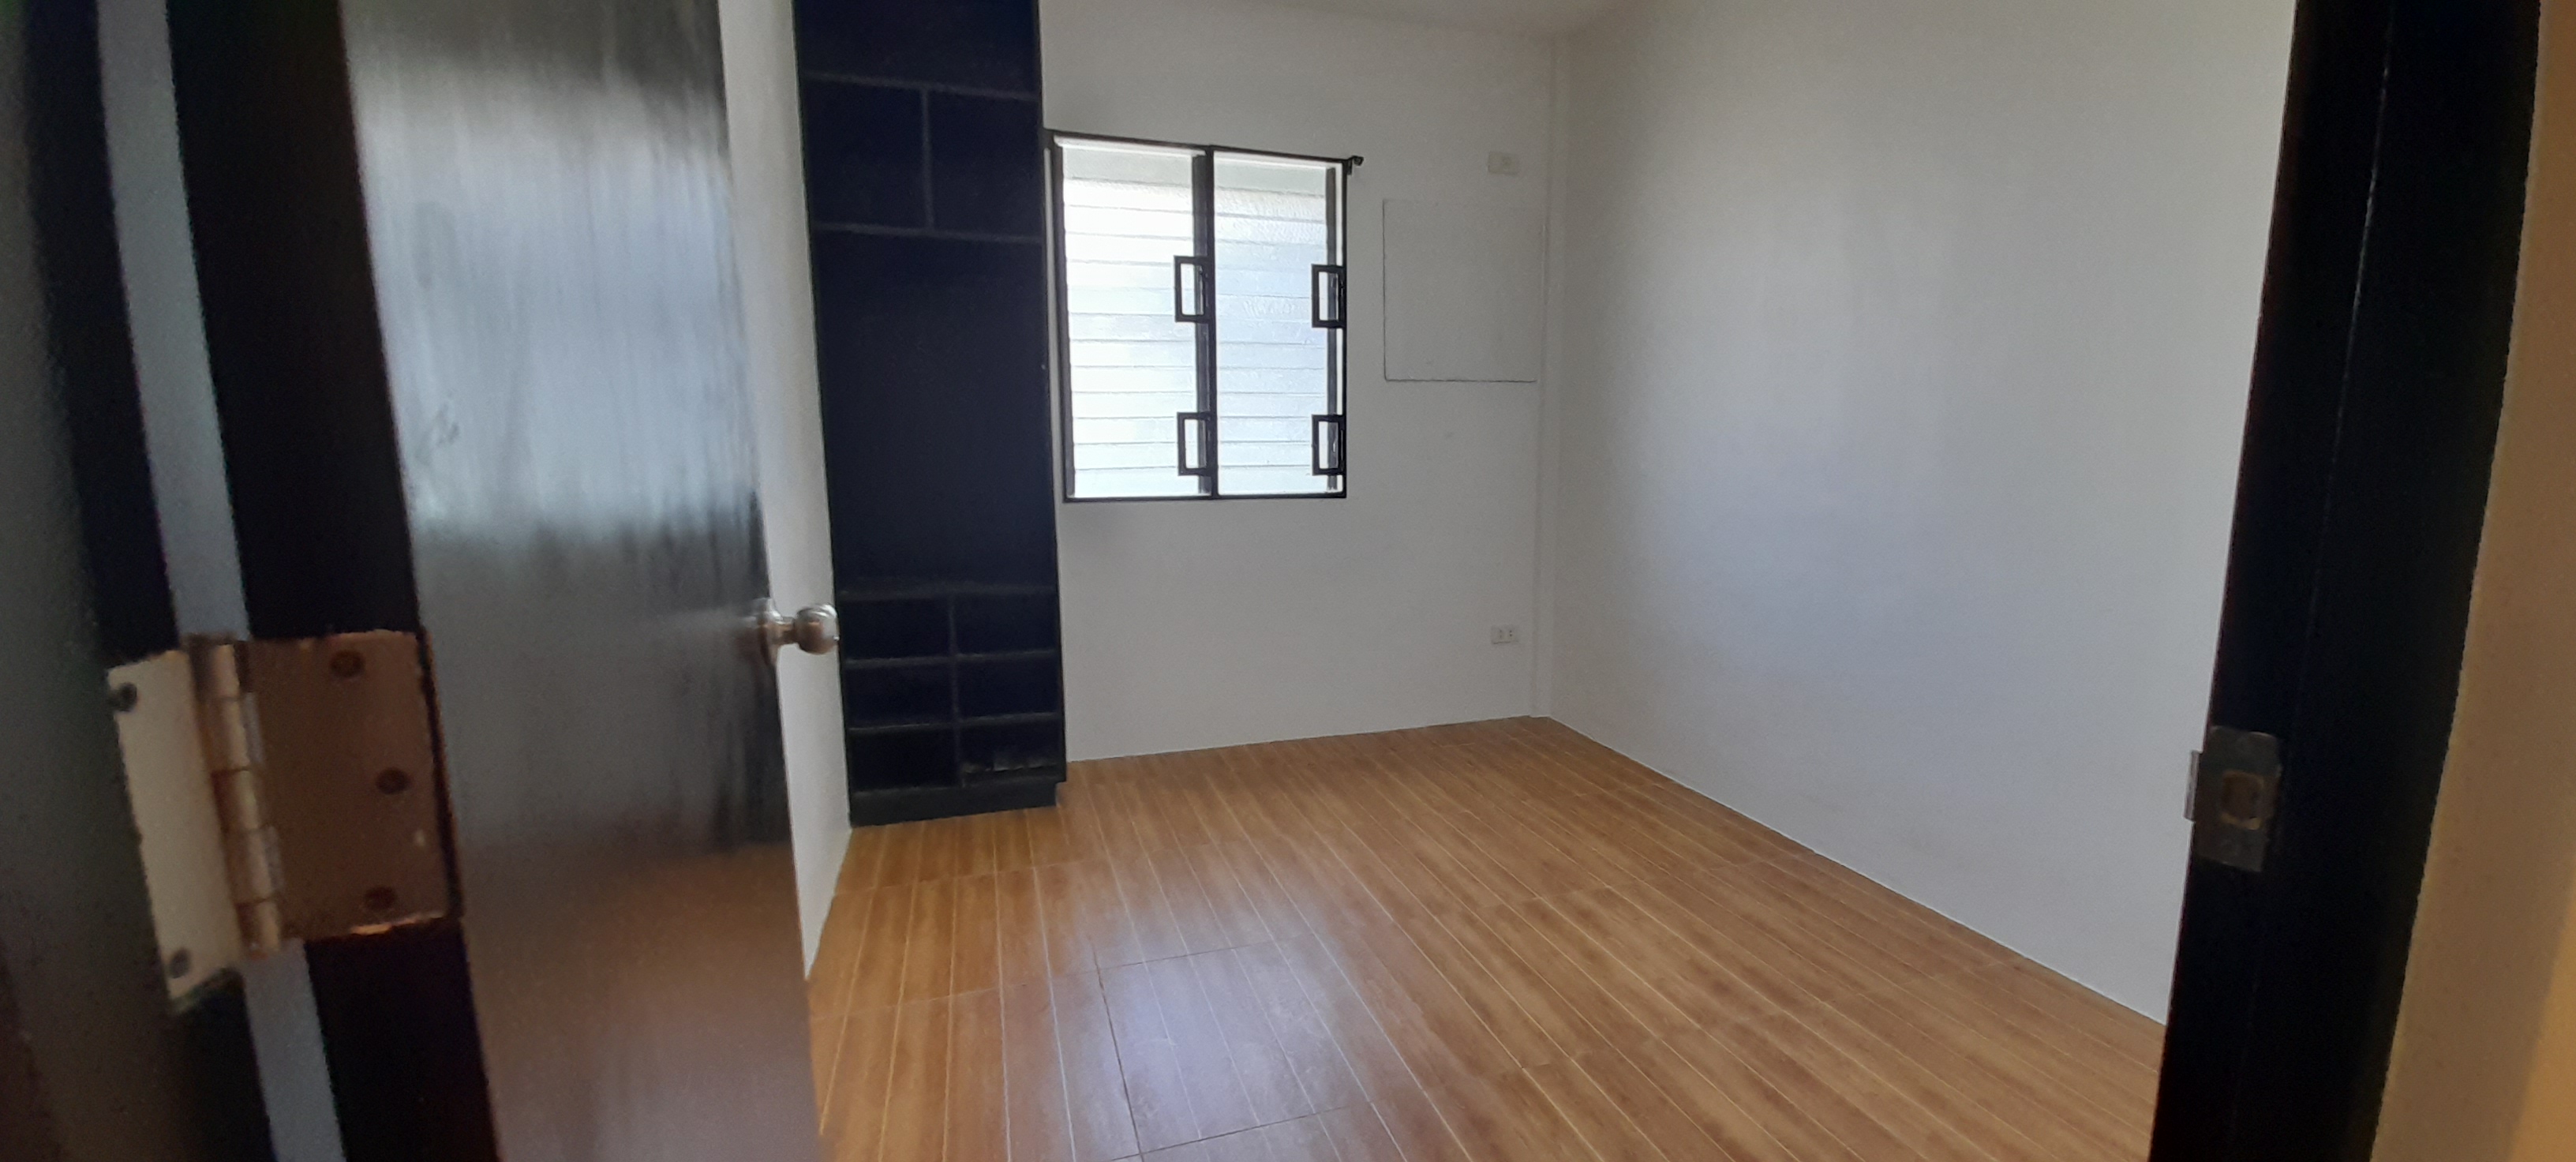 4-bedroom-apartment-in-escario-kamputhaw-cebu-city-at-25k-and-30k